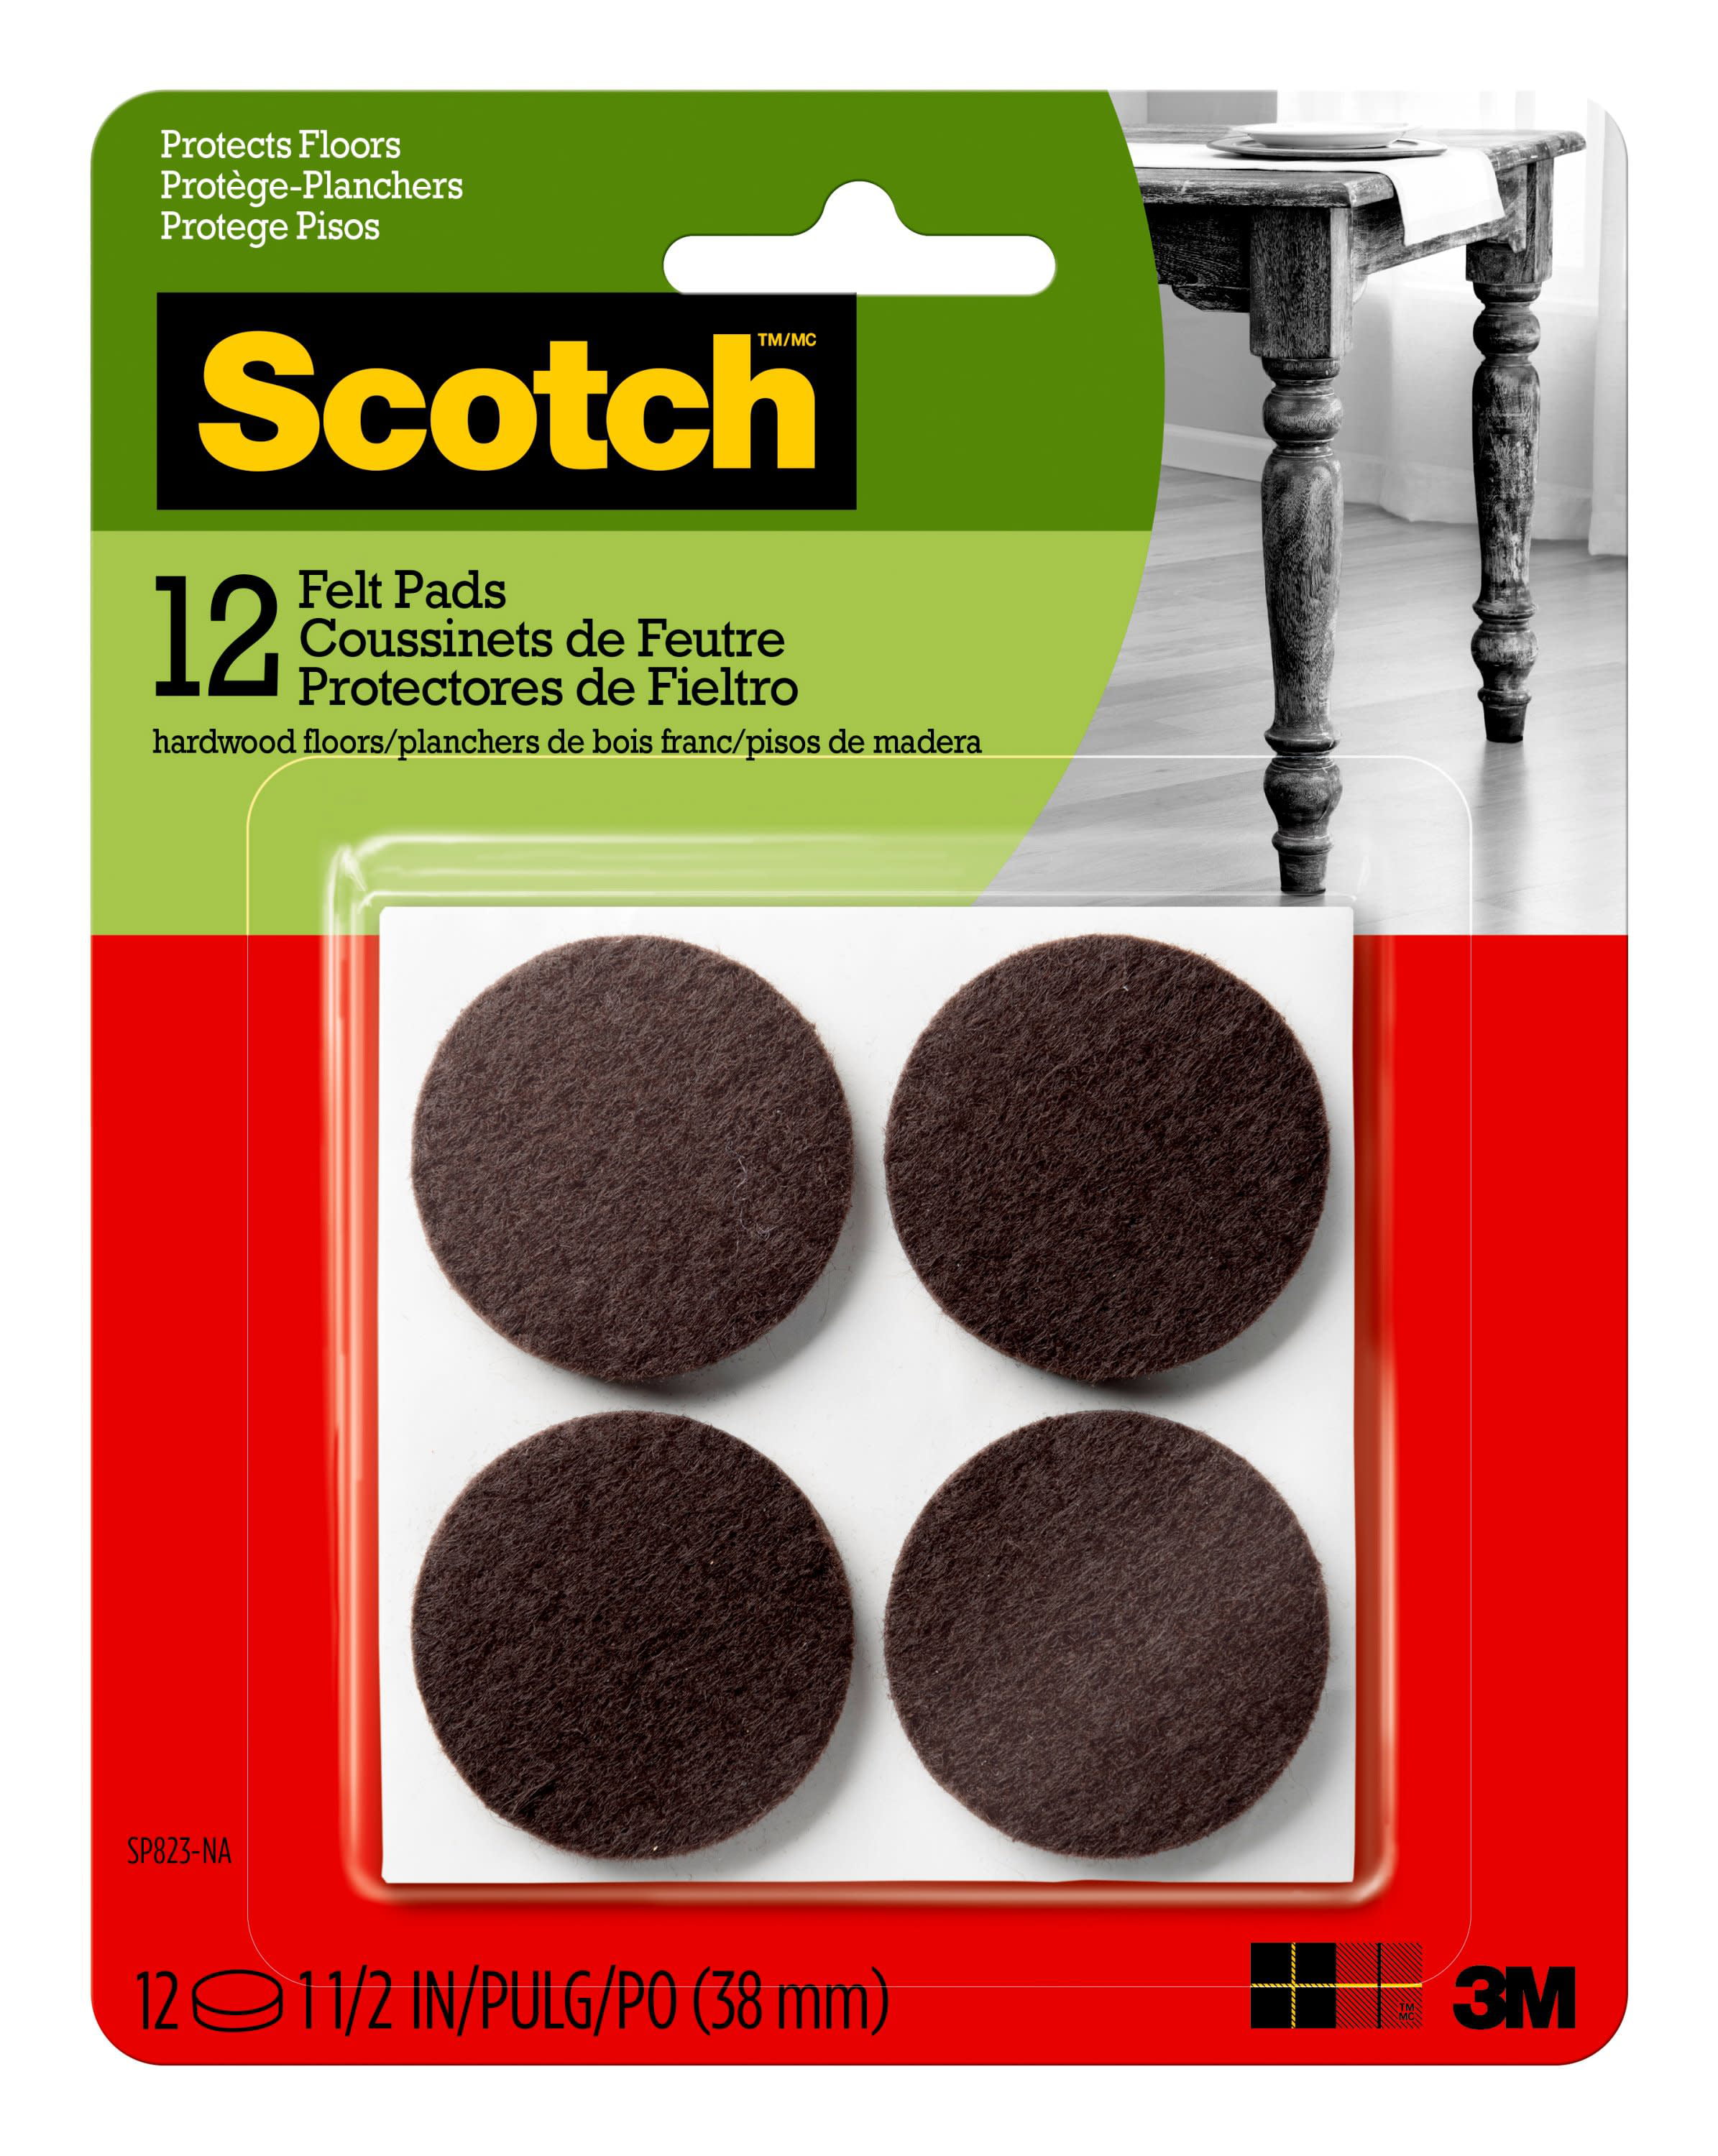 2 PACK 3M Scotch Self-Stick Felt Pads Assorted Green~New 48 PIECES 1/2" 